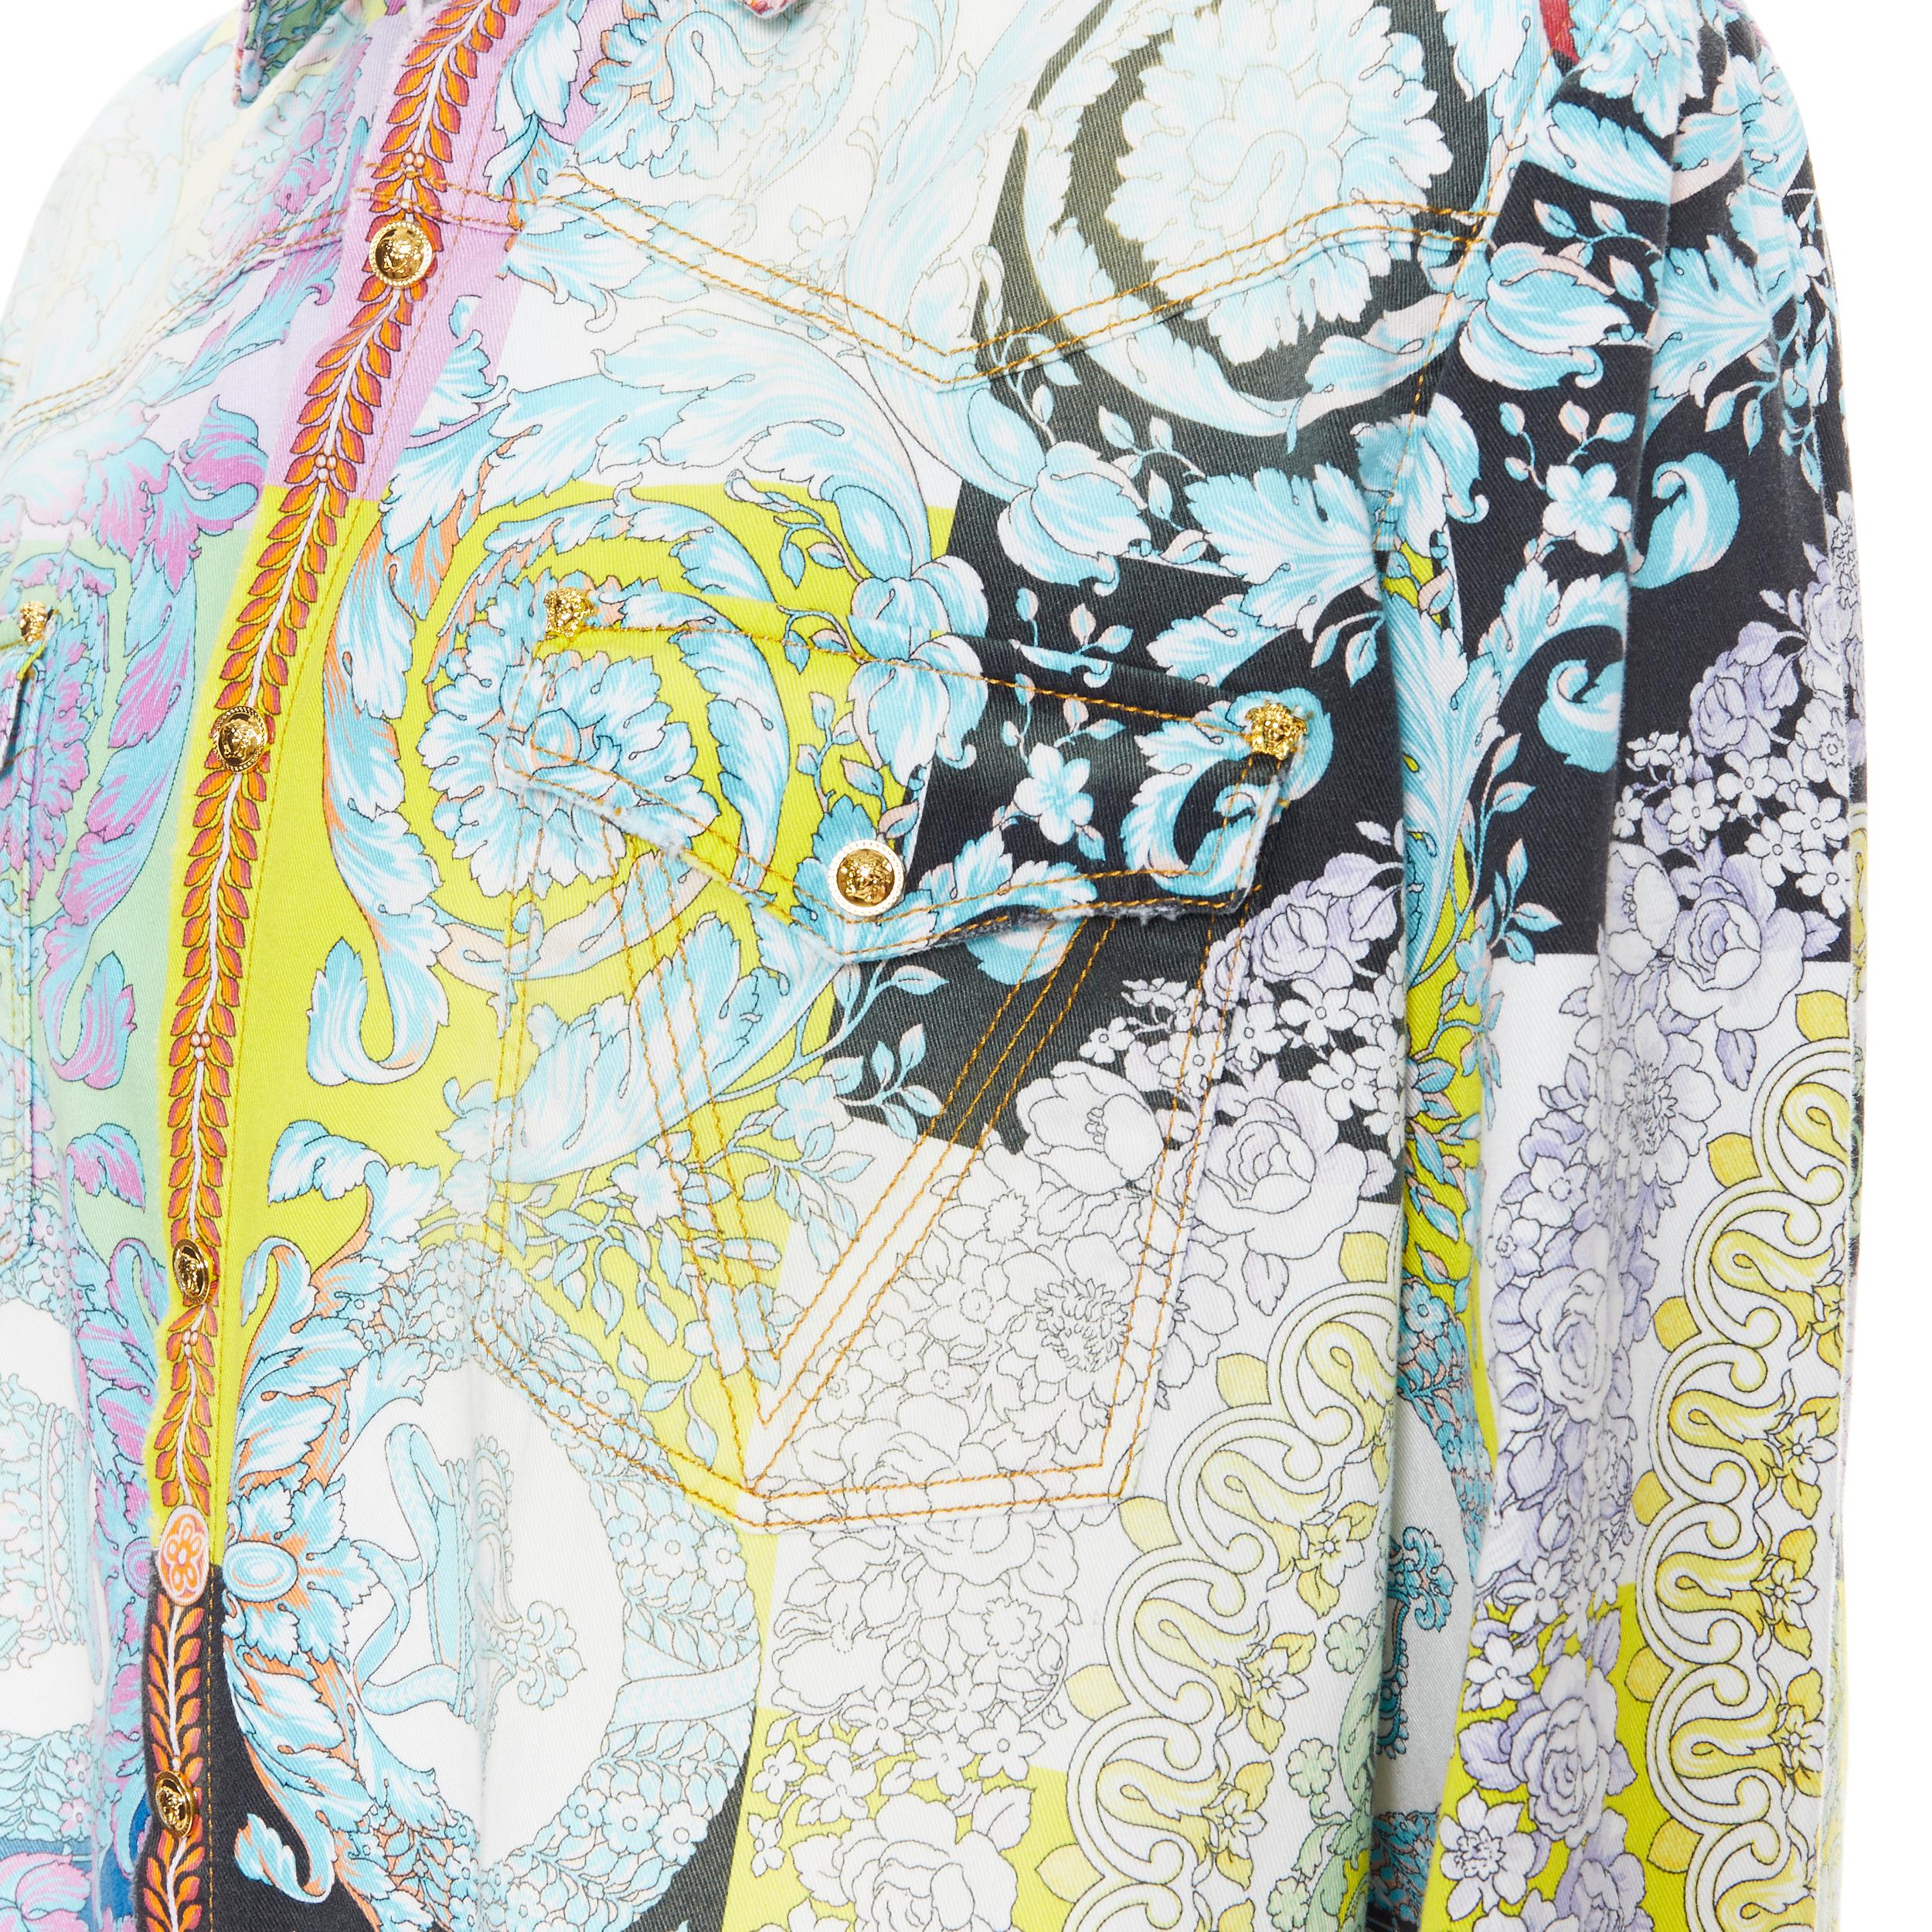 neu VERSACE 2019 Techno Baroque distressed Baumwolle Medusa übergroßes Hemd EU38 S im Angebot 3